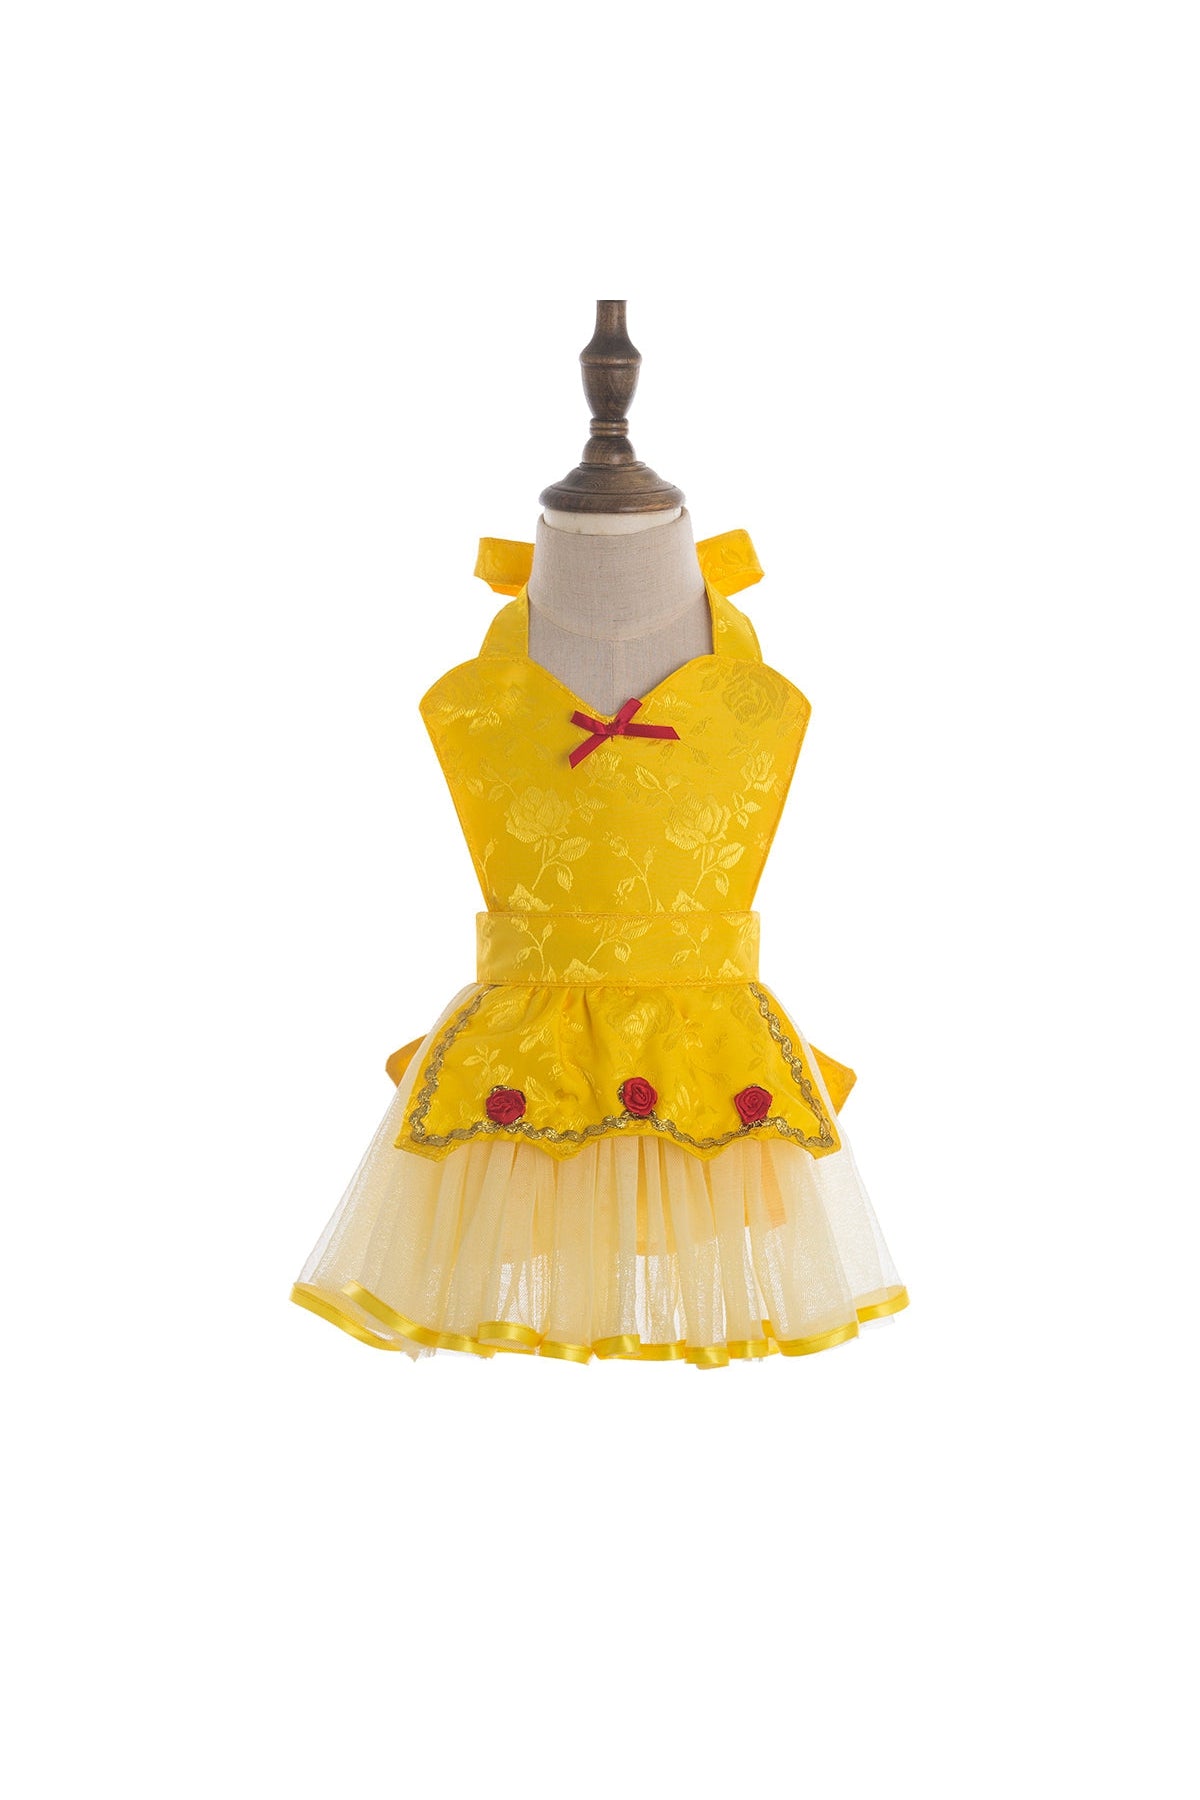 Apron Mini - Princess inspired - Belle